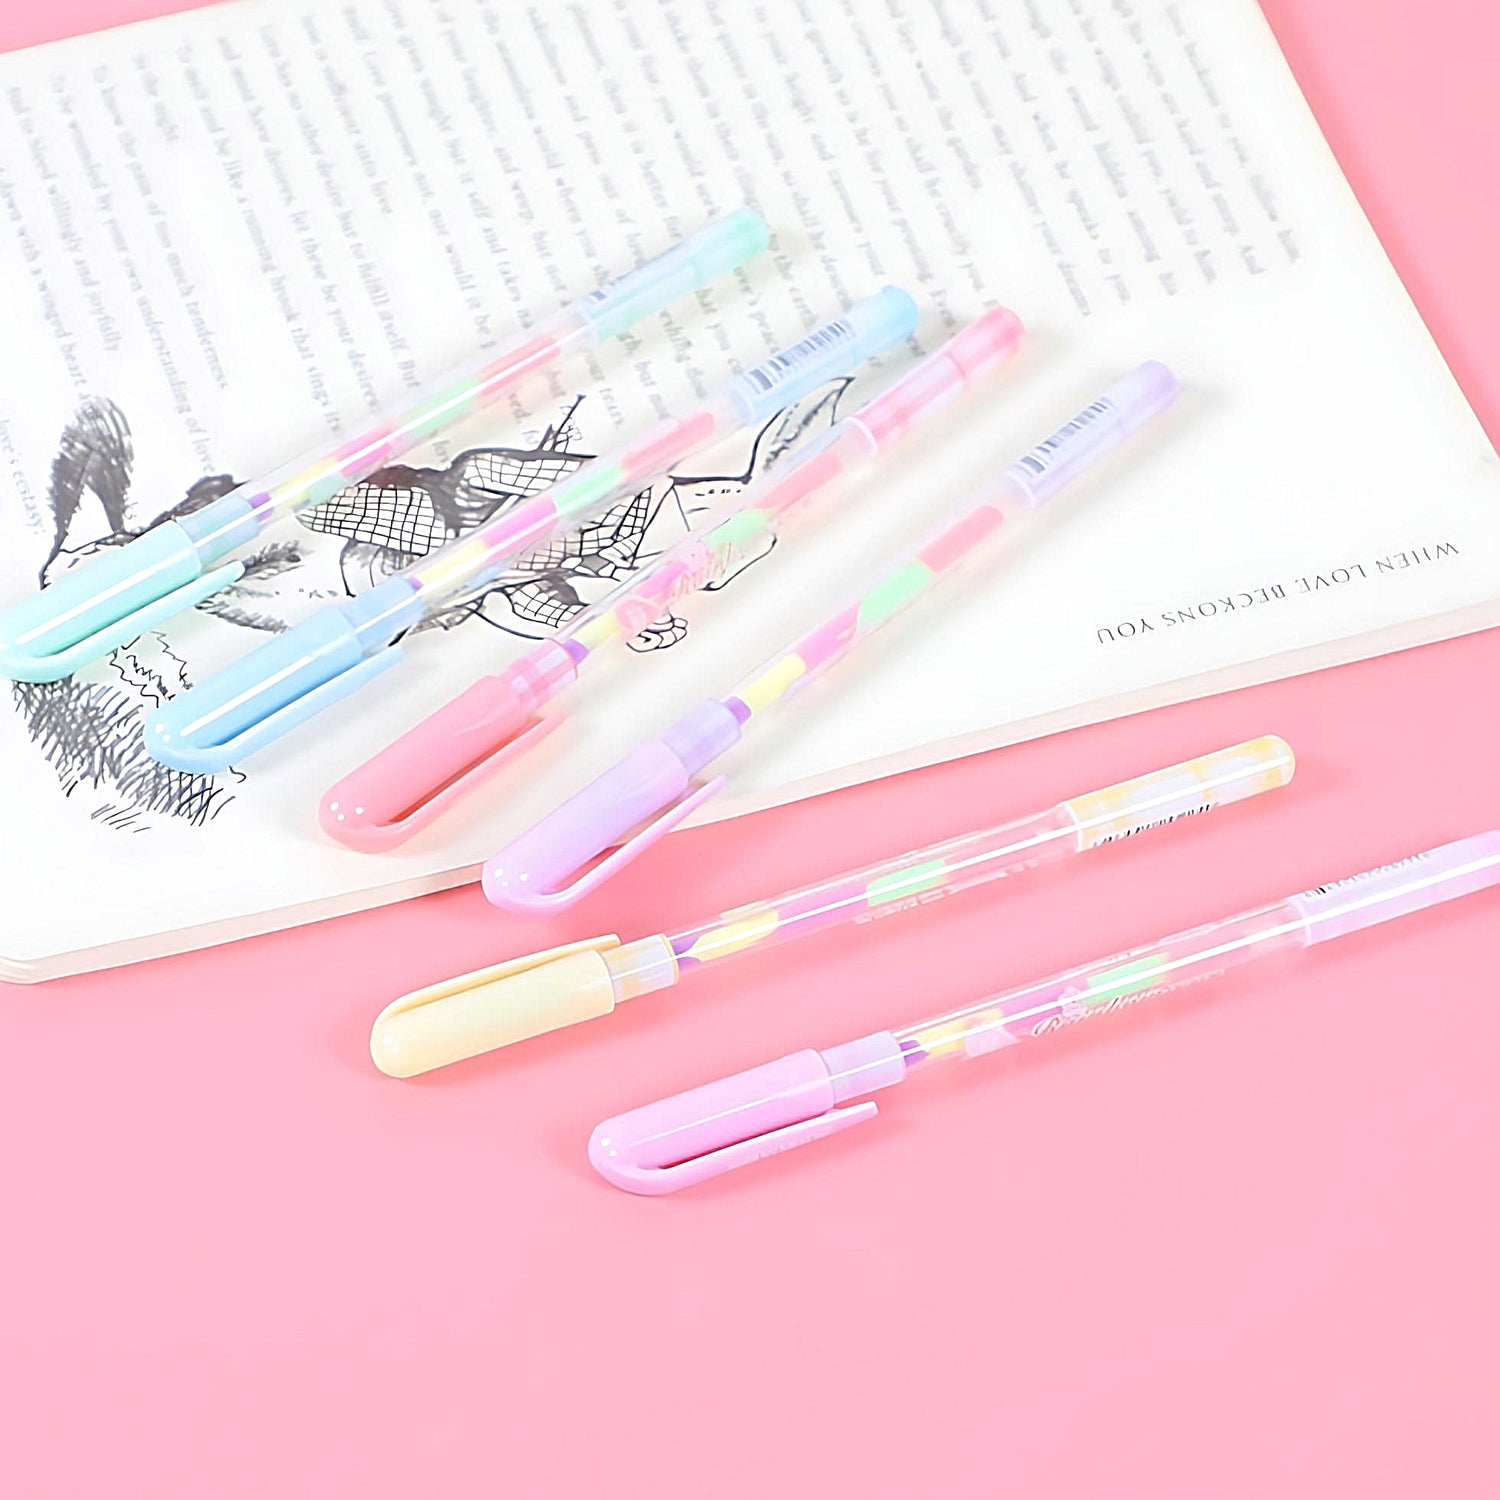 six Zuixua rainbow gel pens on a pink background